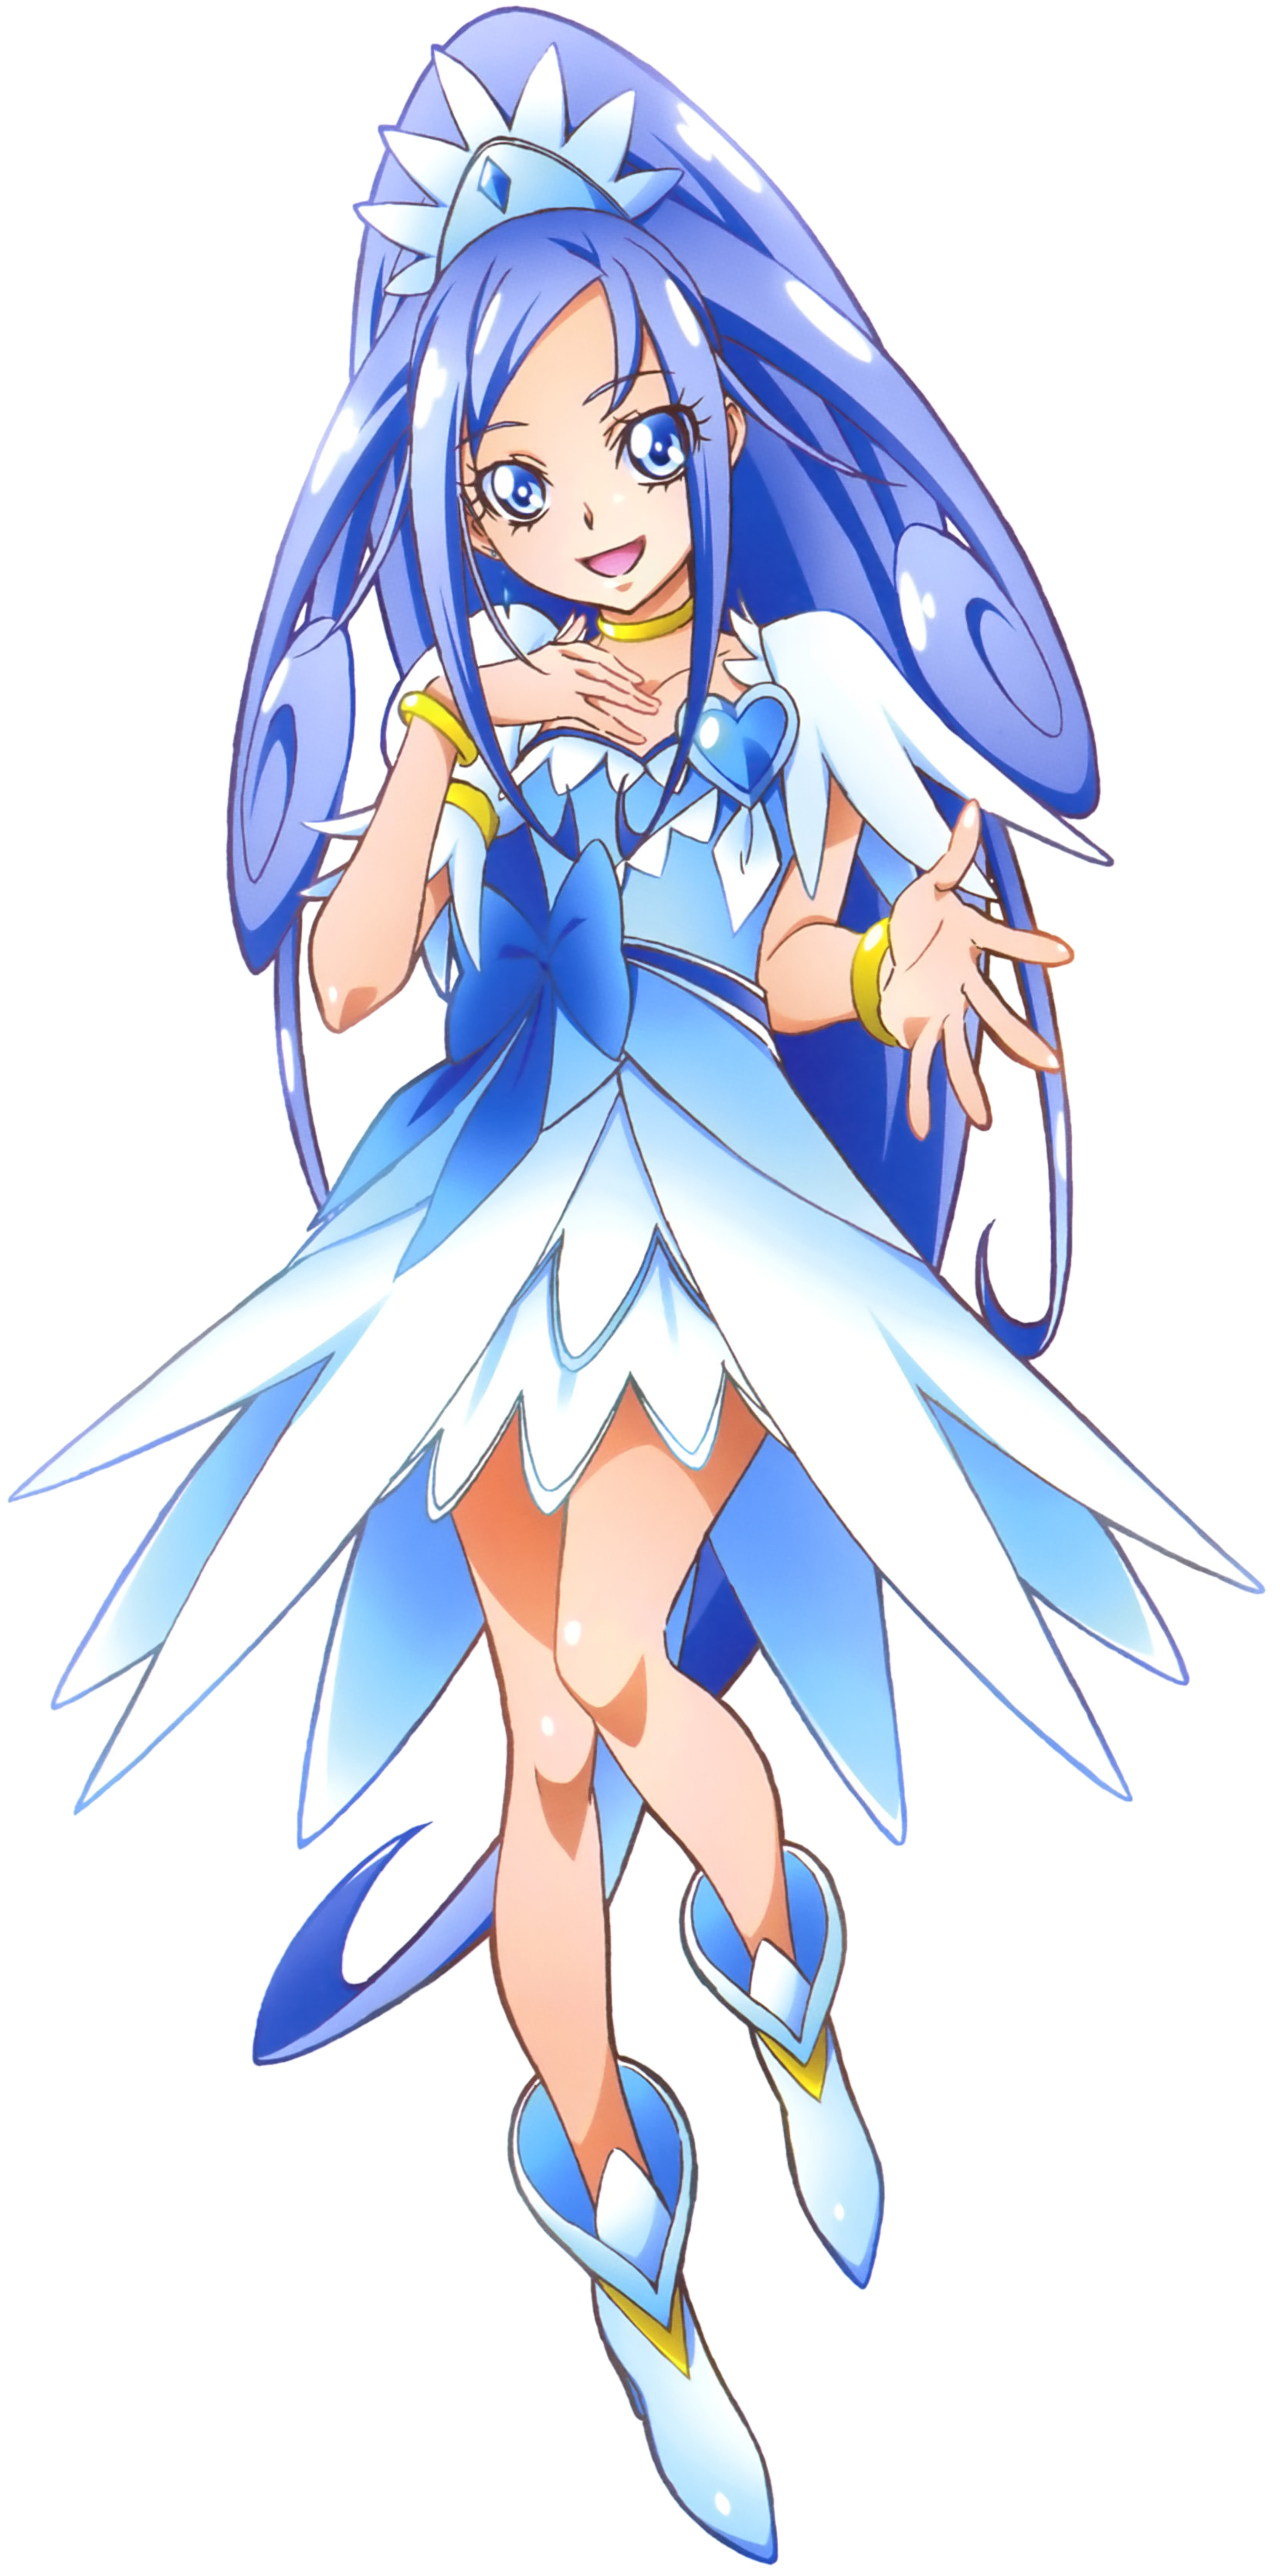 Image Doki Doki Pretty Cure Cure Diamond Pose4png Magical Girl Mahou Shoujo 魔法少女 Wiki 5248